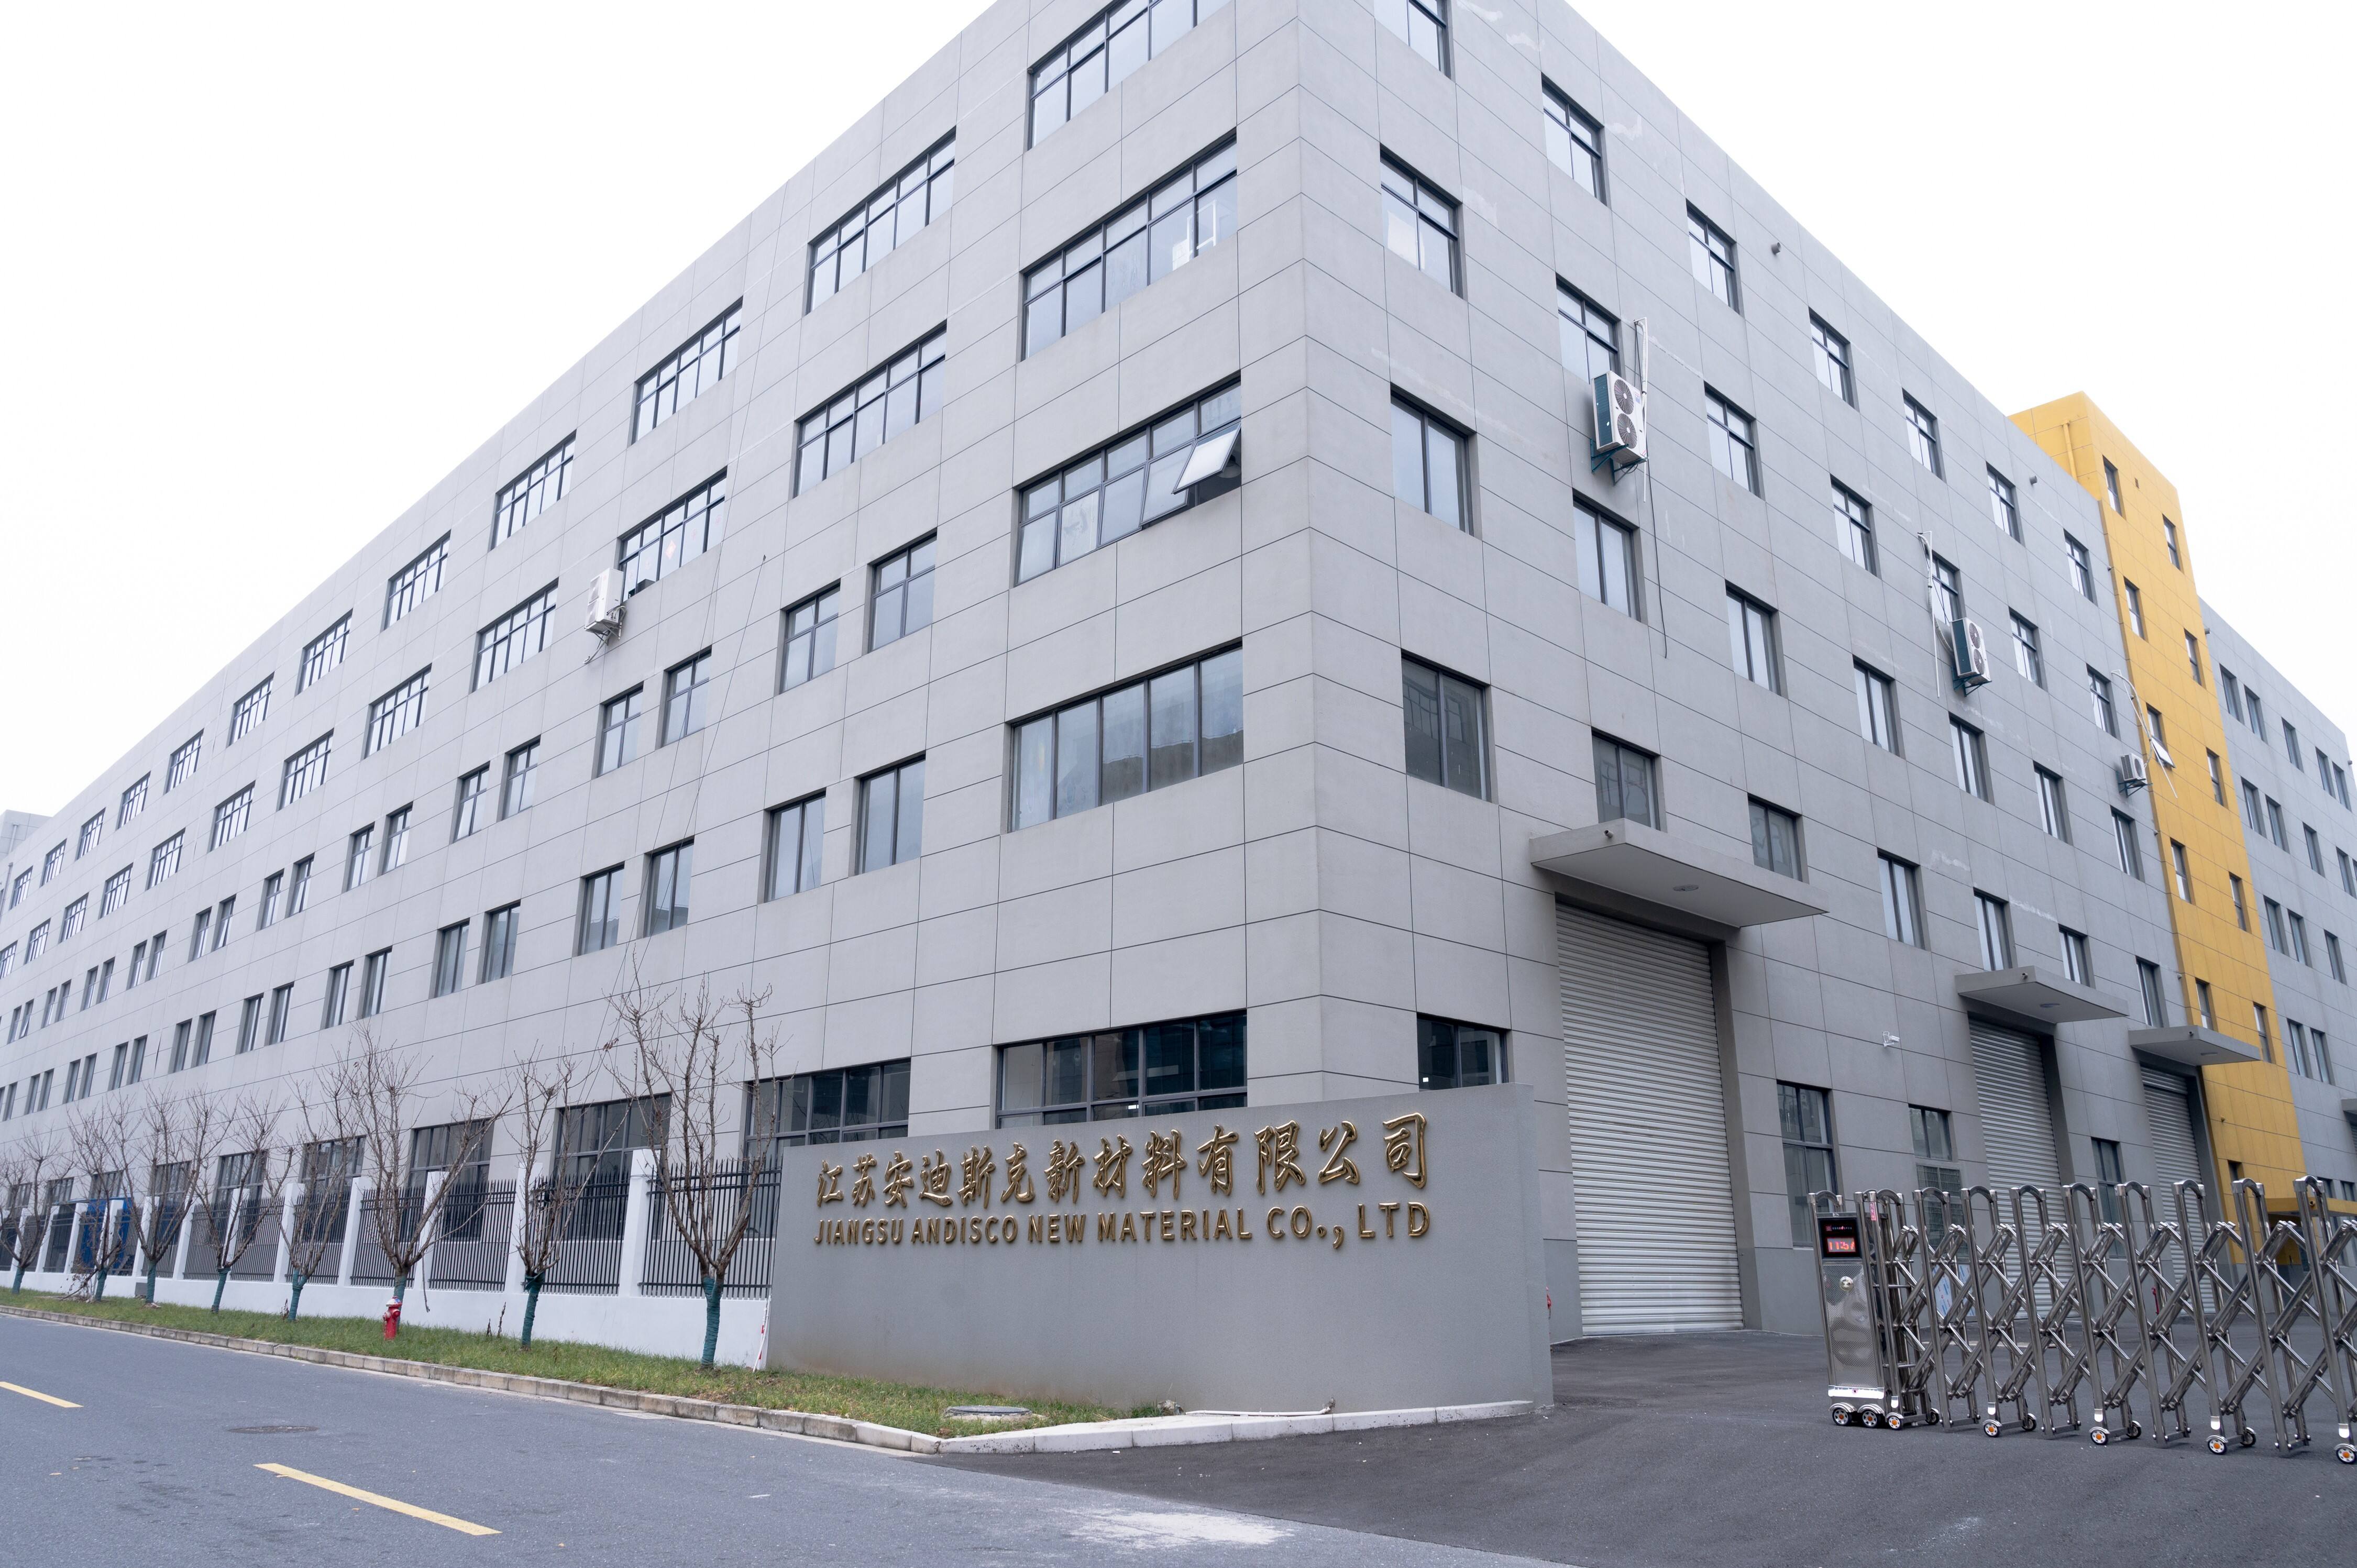 Jiangsu Andisco New Materials Co., Ltd.